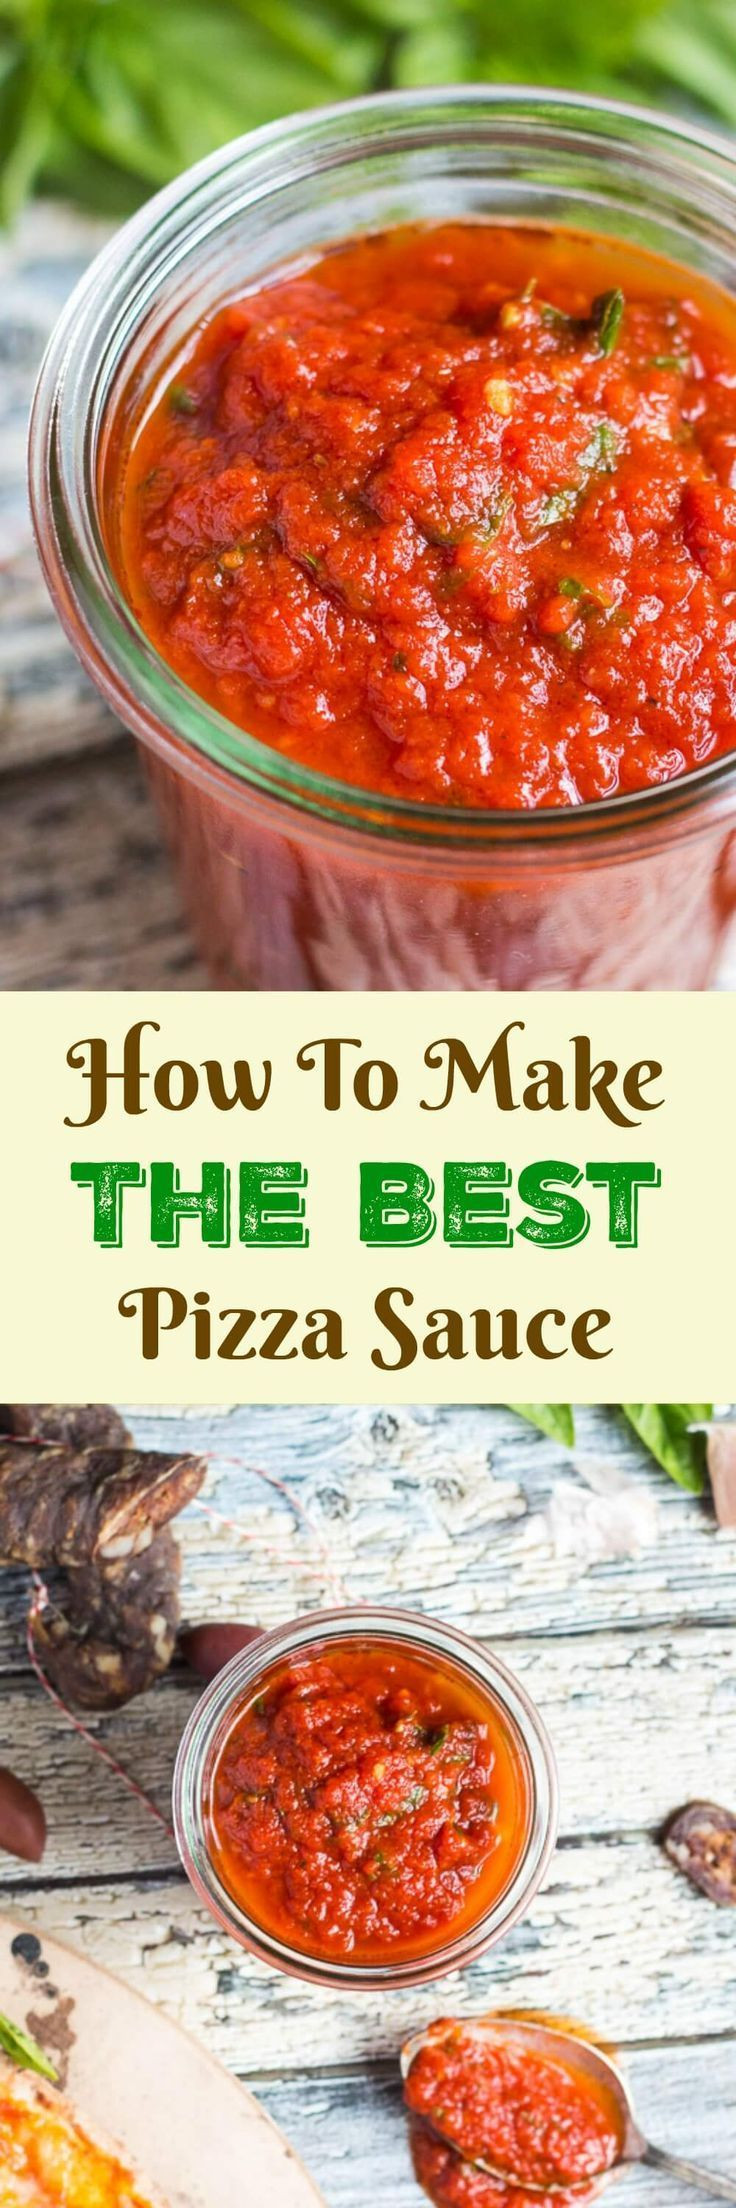 Homemade Pizza Sauce From Scratch
 25 best Canning pizza sauce ideas on Pinterest